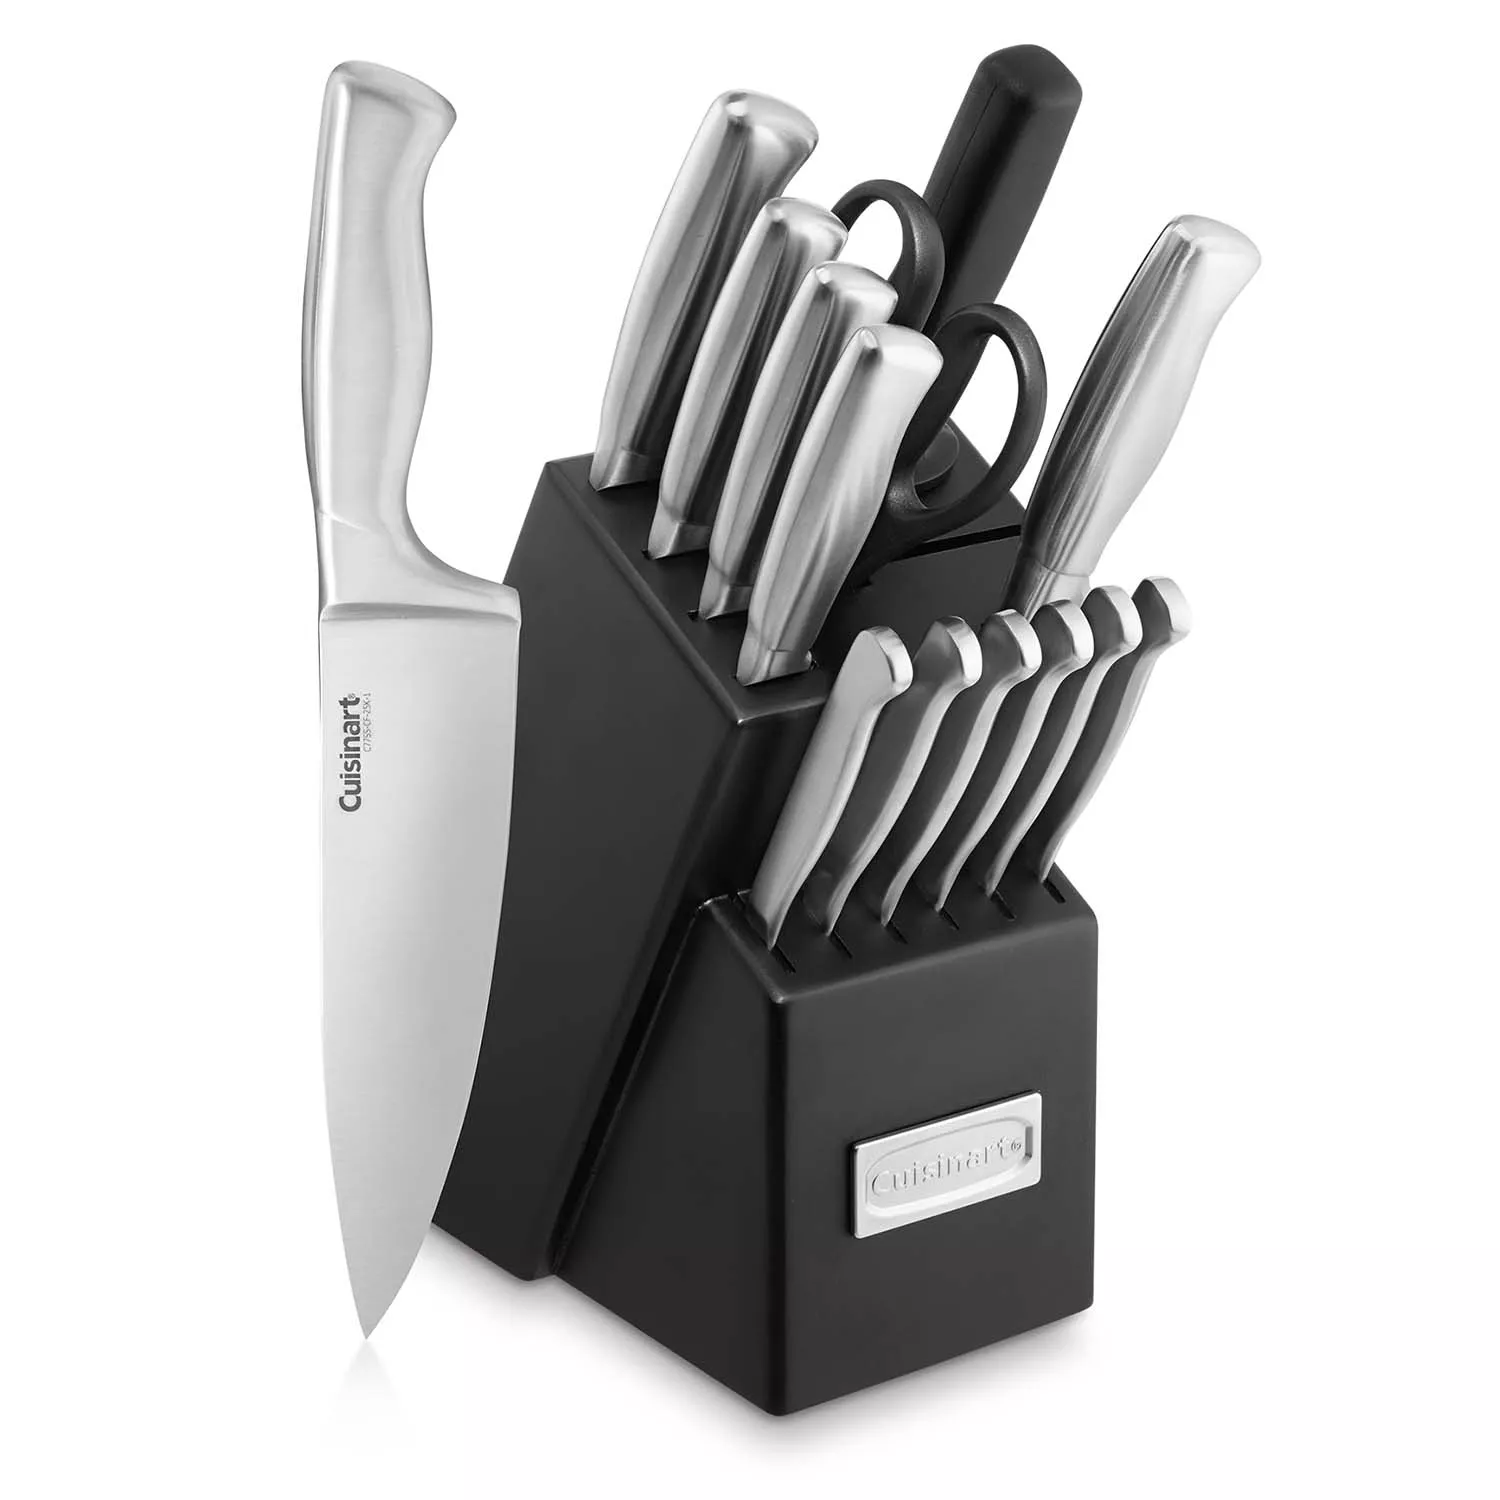 Select by Calphalon 15pc Self-Sharpening Cutlery Set Dark